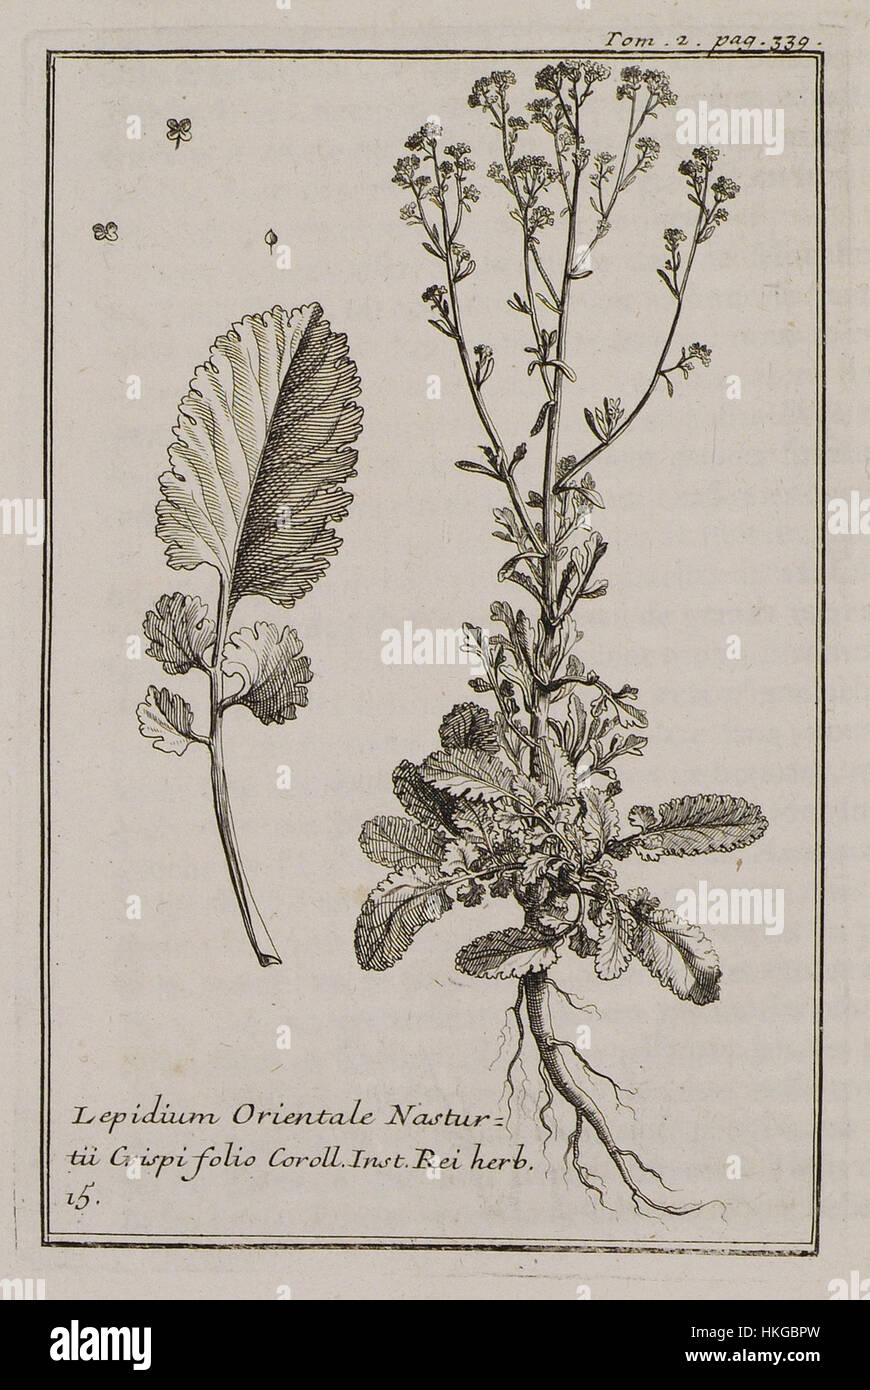 Lepidium Orientale Nasturtii Crispi folio Coroll Inst Rei herb 15   Tournefort Joseph Pitton De   1717 Stock Photo